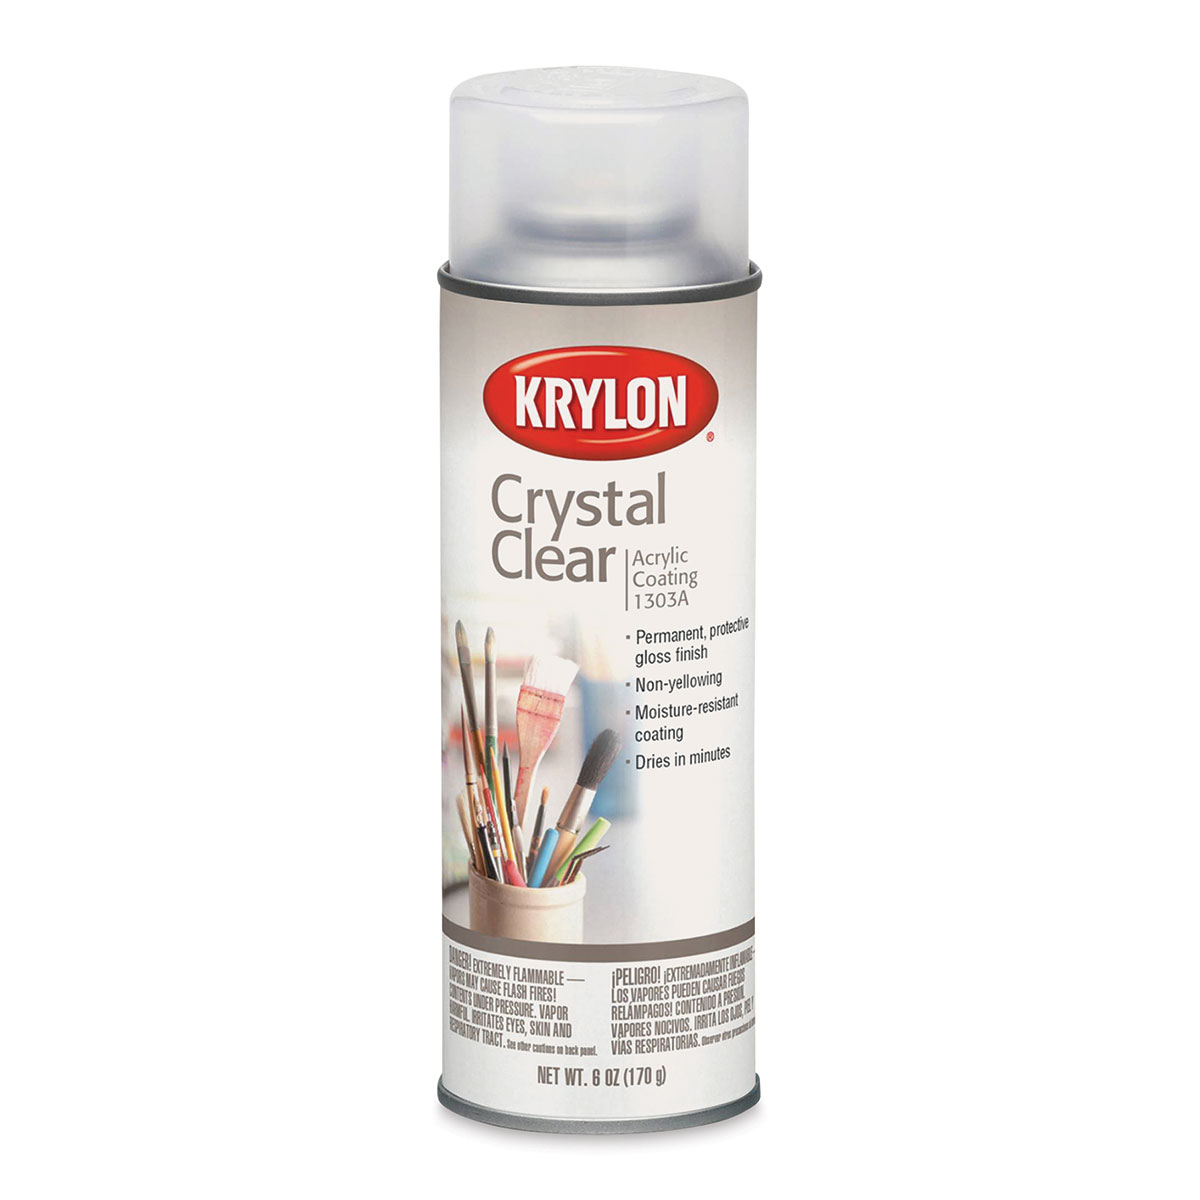 Krylon Glitter Blast Silver Flash Gloss Spray Paint - 10.25 oz